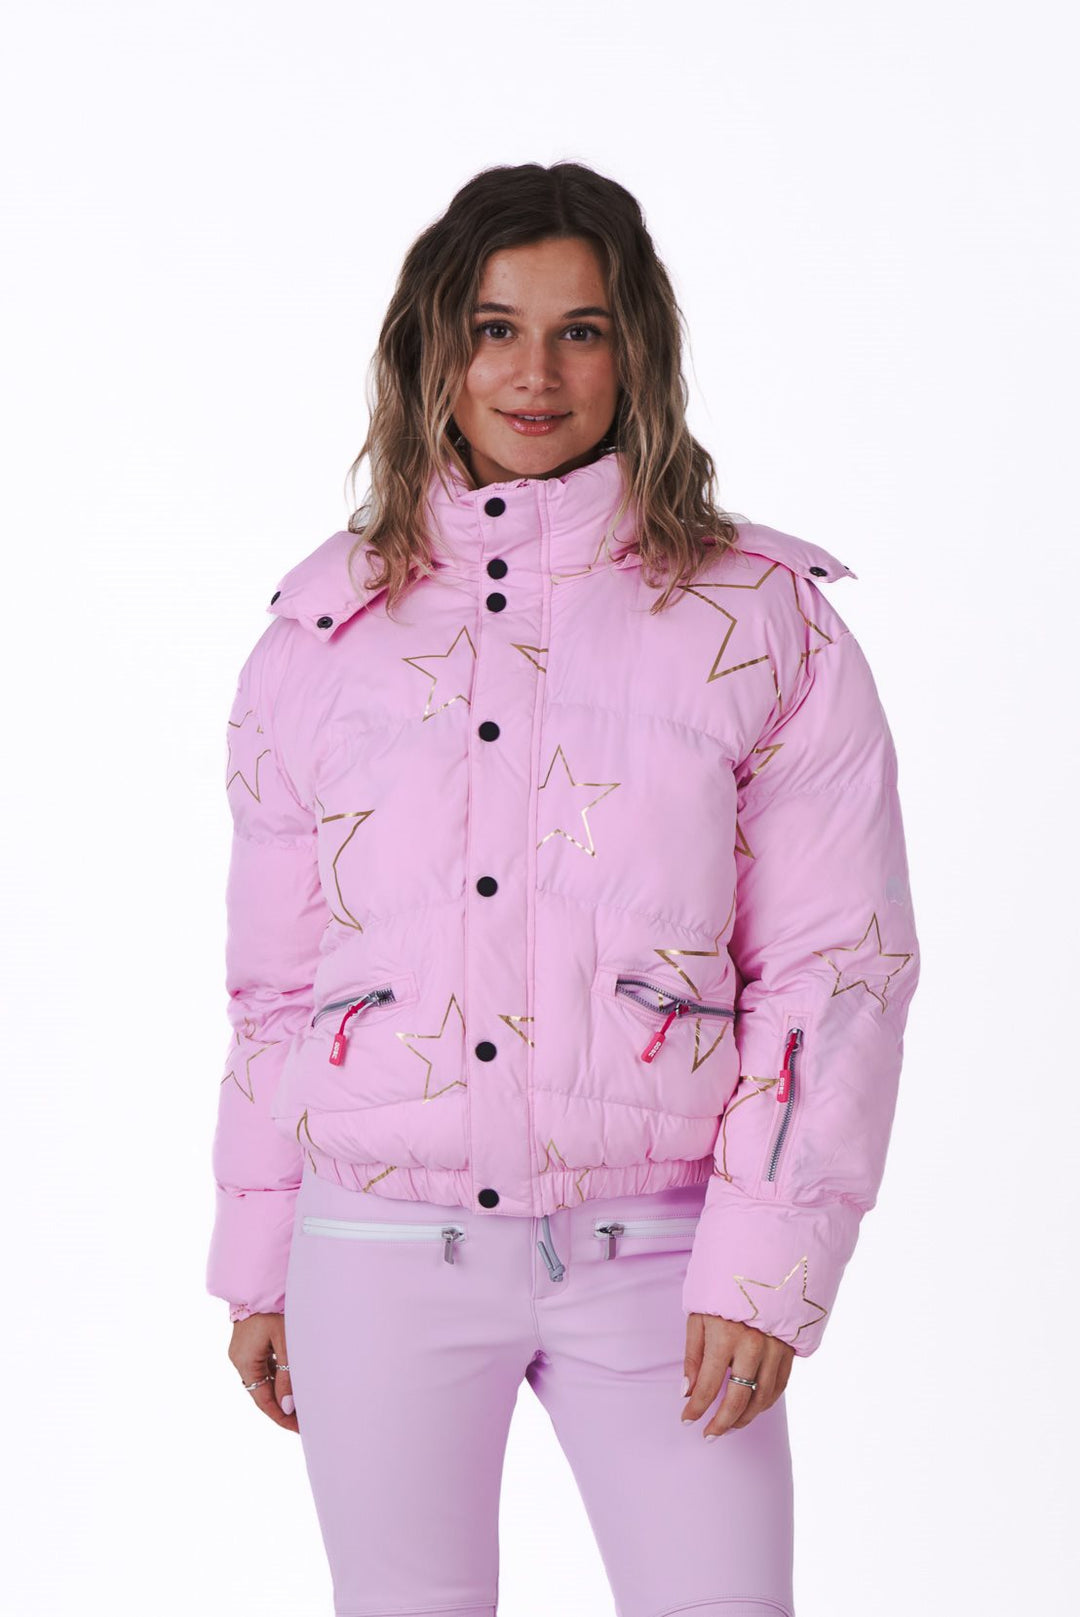 Womens Ski Wear – OOSC Clothing - EU